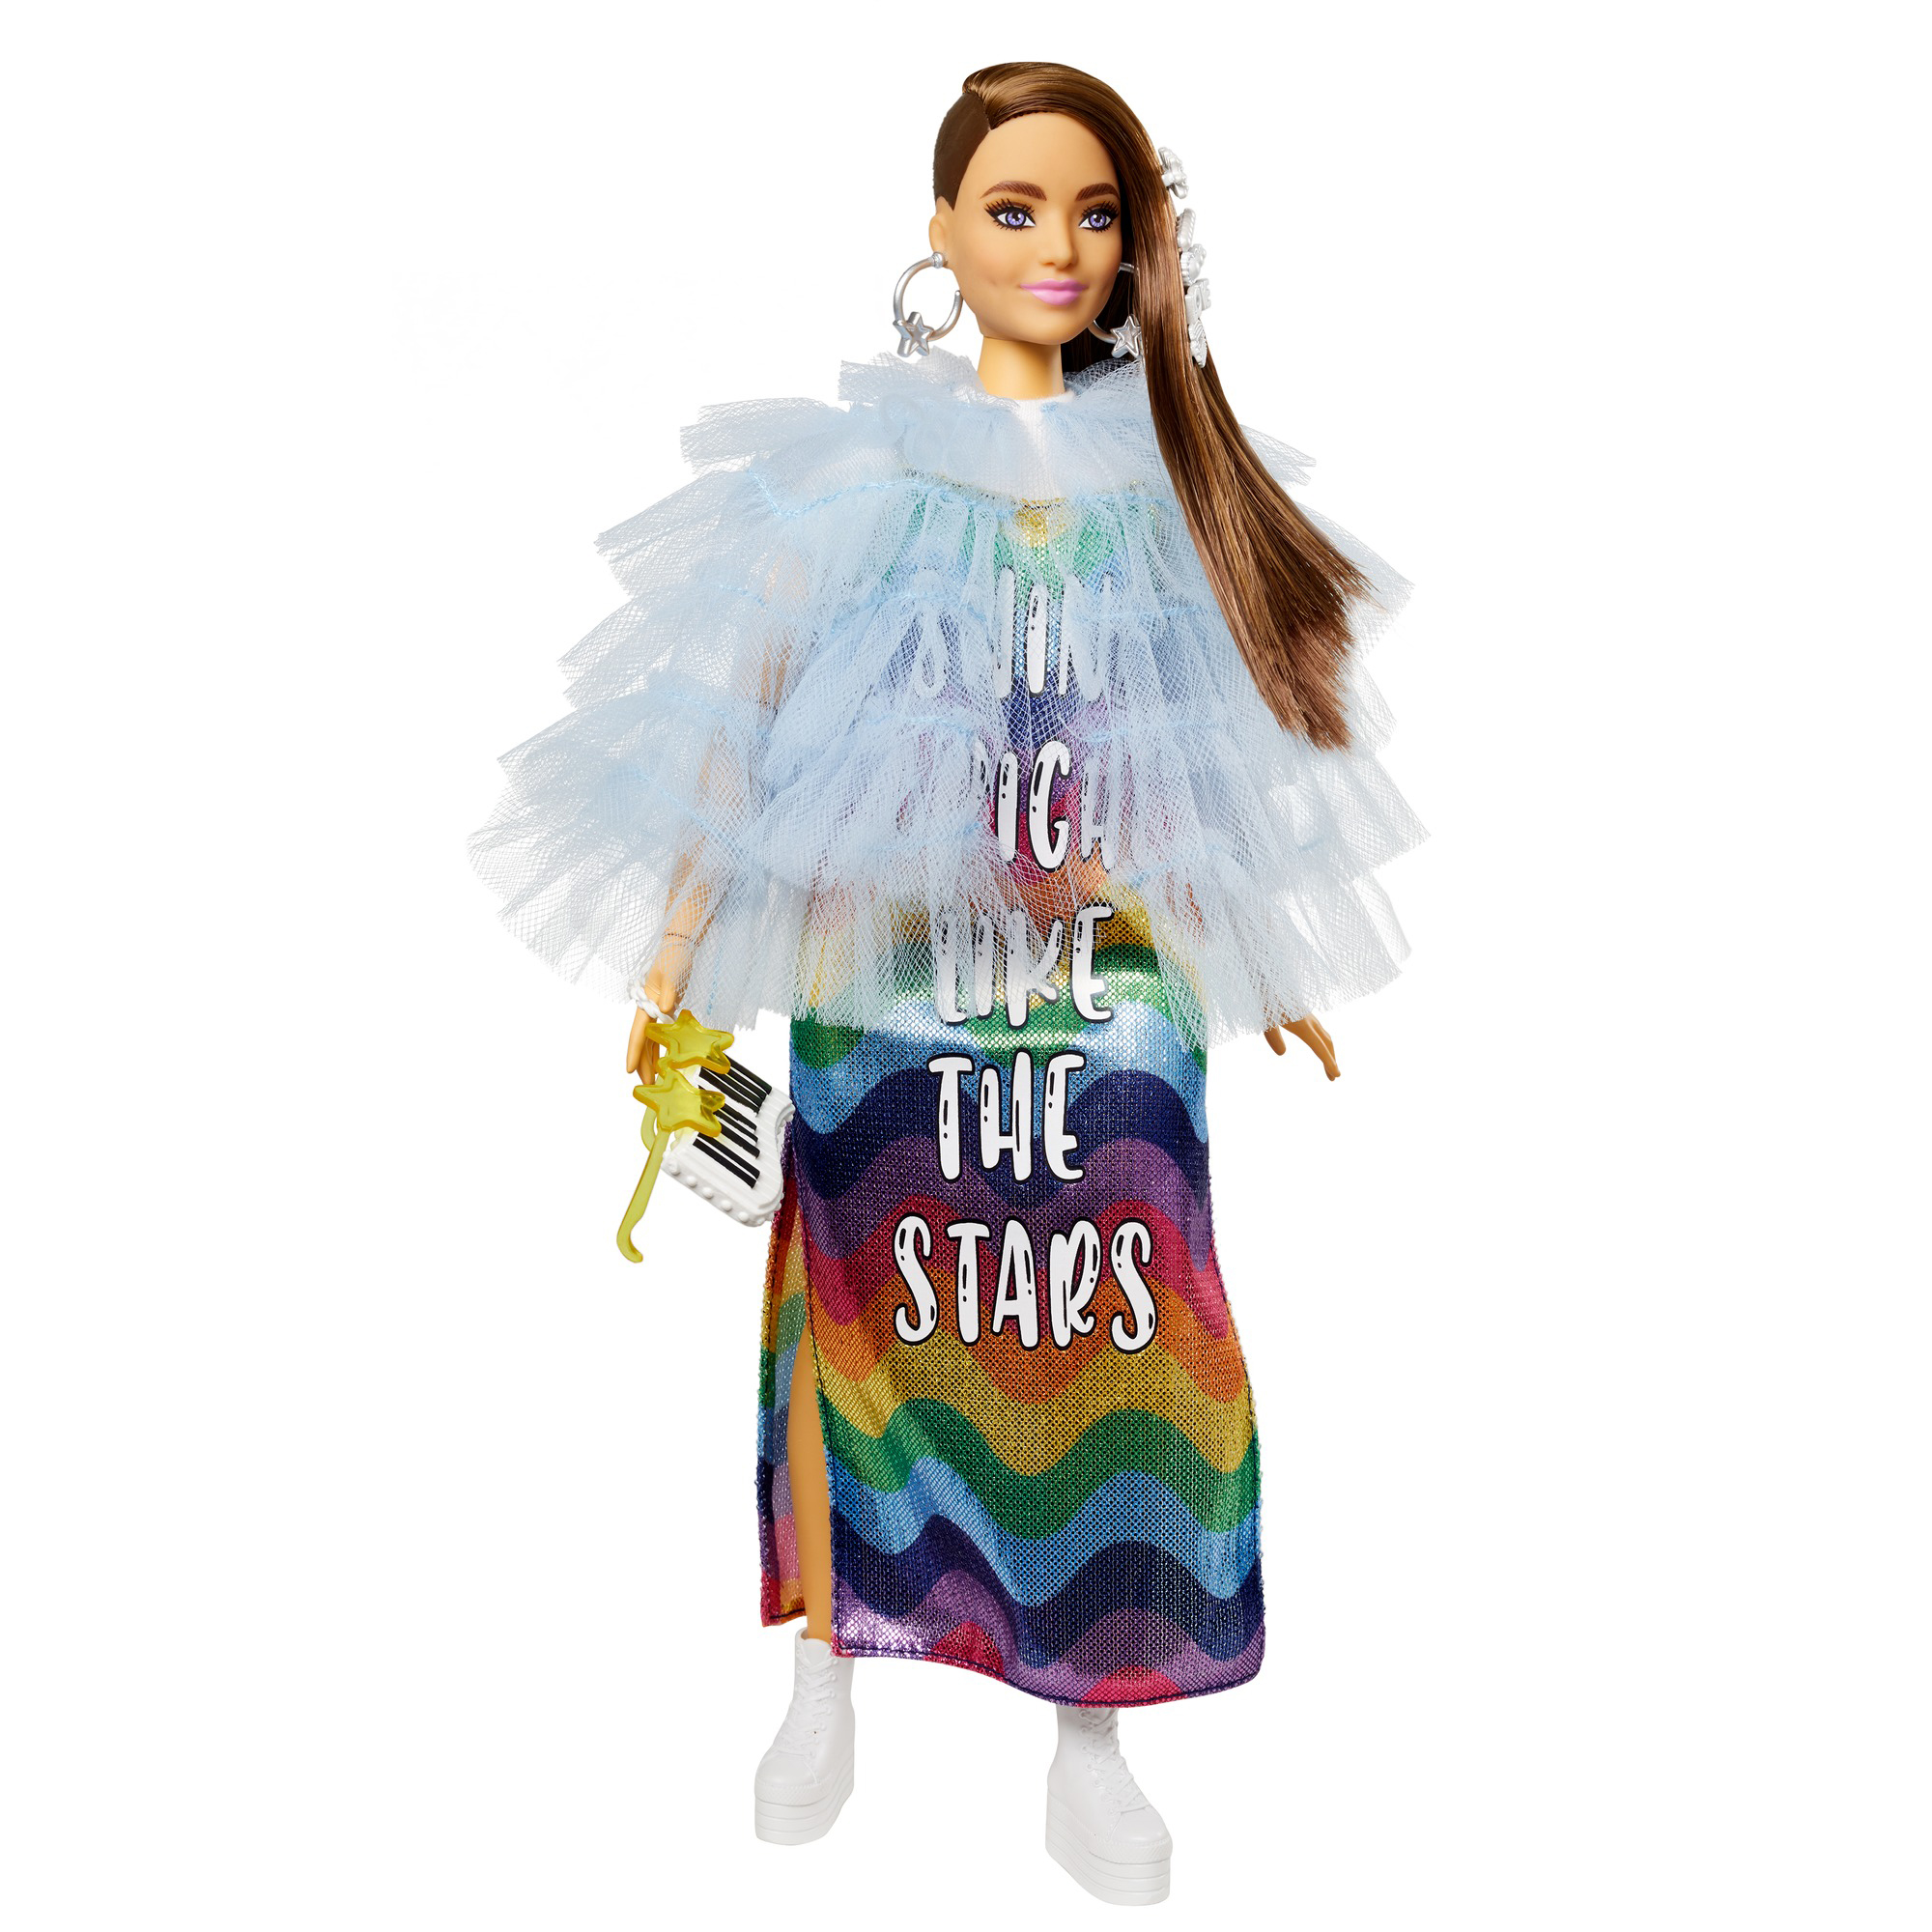 Costume Barbie arcobaleno da bambina per 38,00 €